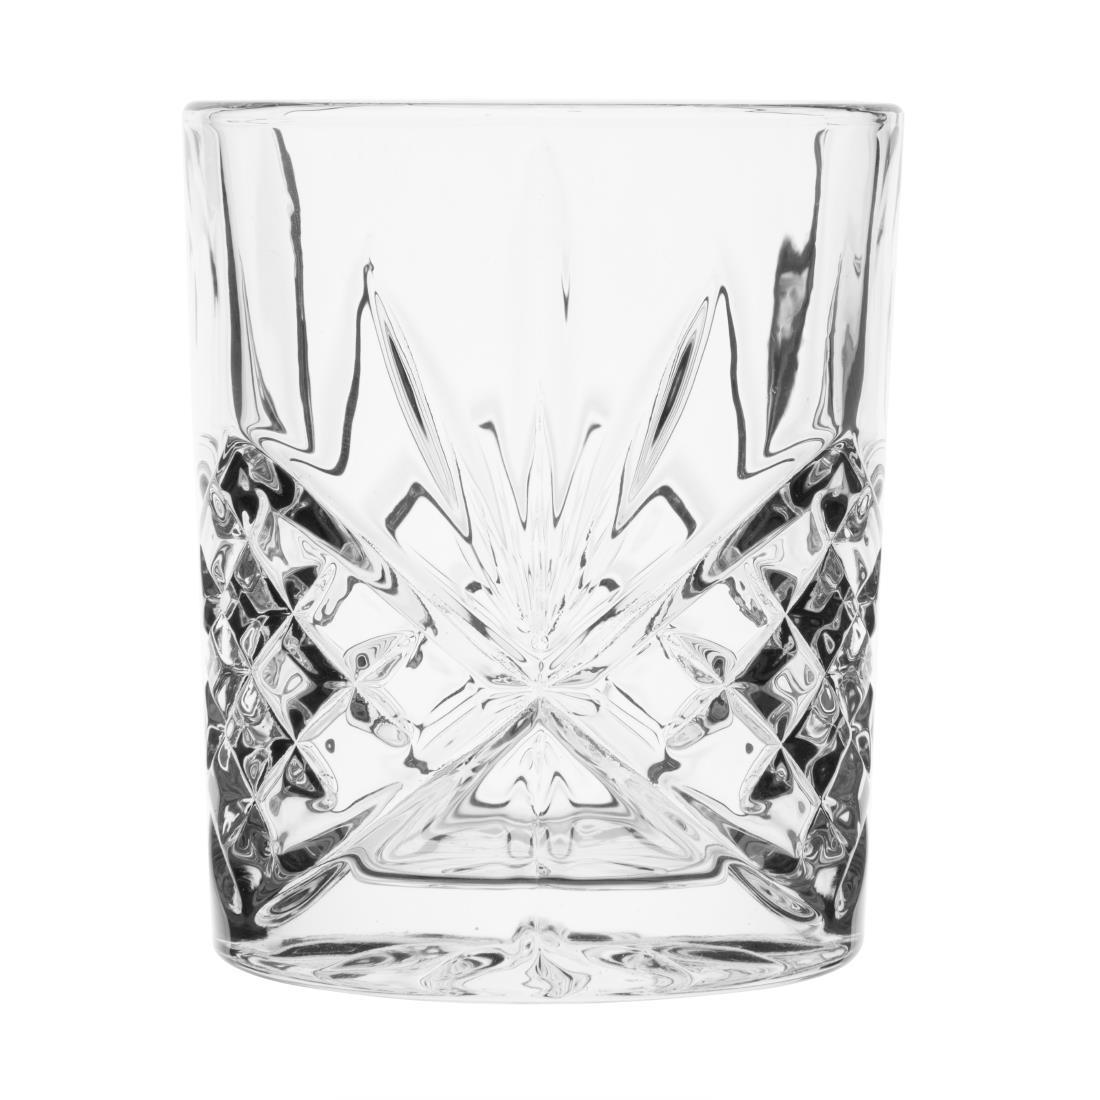 Olympia Old Duke Whiskey Glasses 295ml (Pack of 6) - CW393  - 1